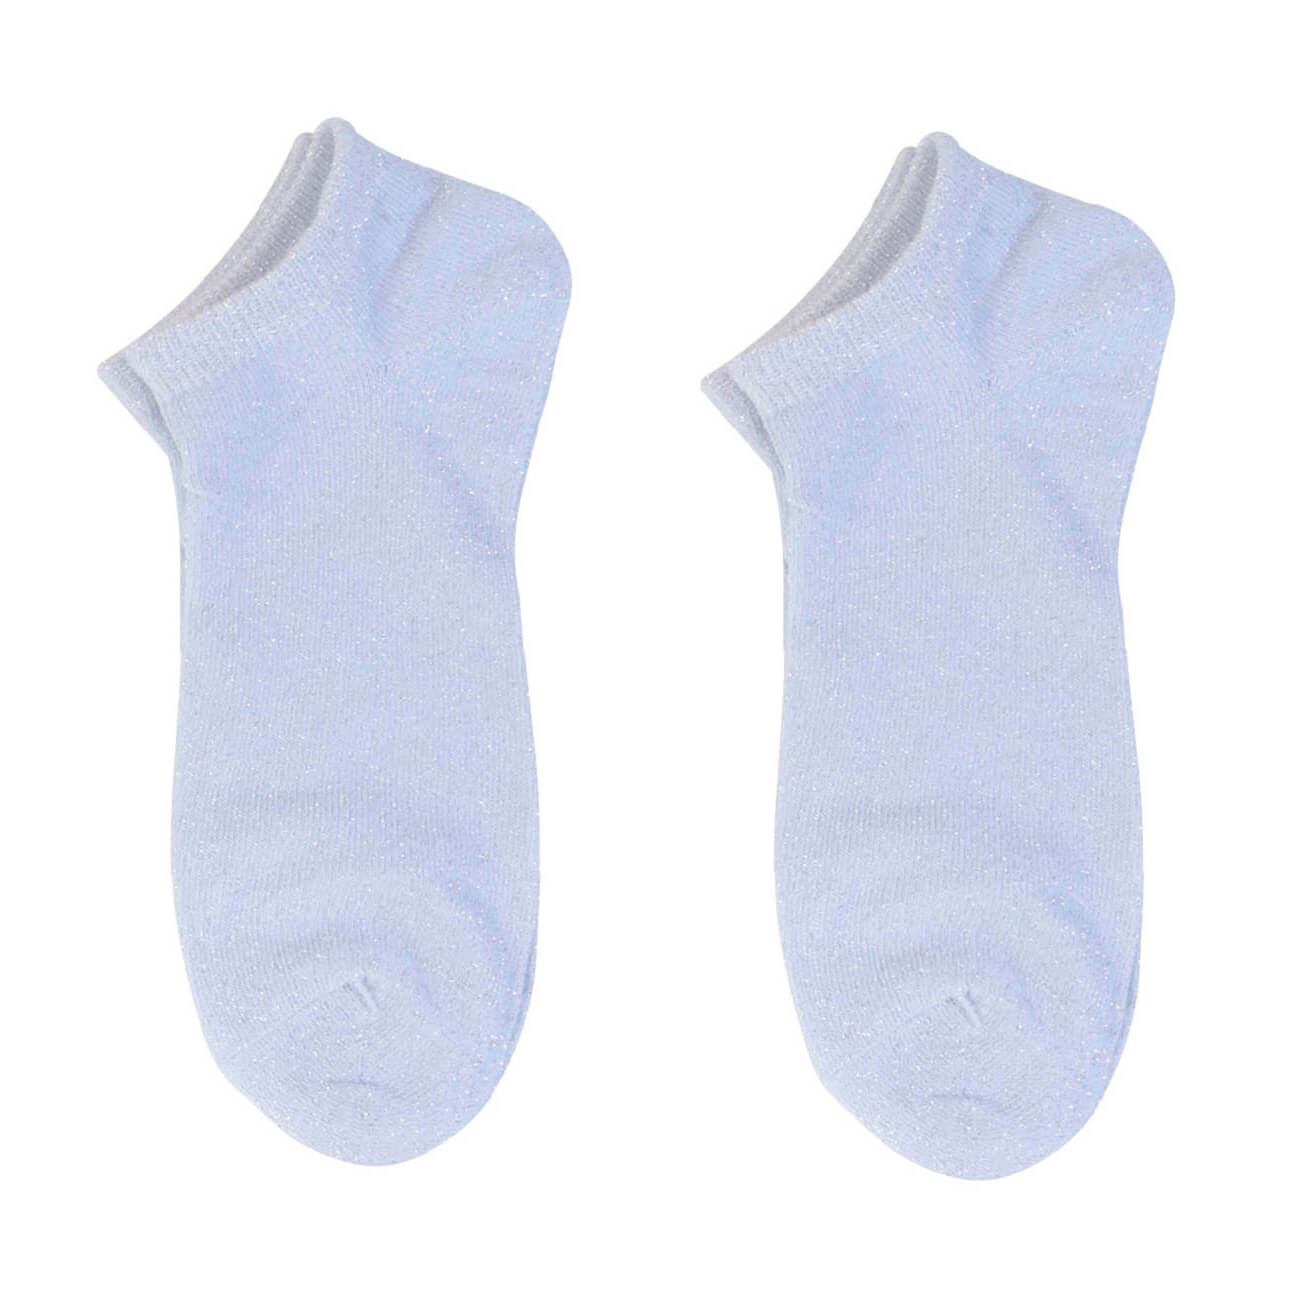 Носки женские, р. 39-41, хлопок/полиэстер, белые, Glint носки детские р 23 26 хлопок полиэстер белые basic